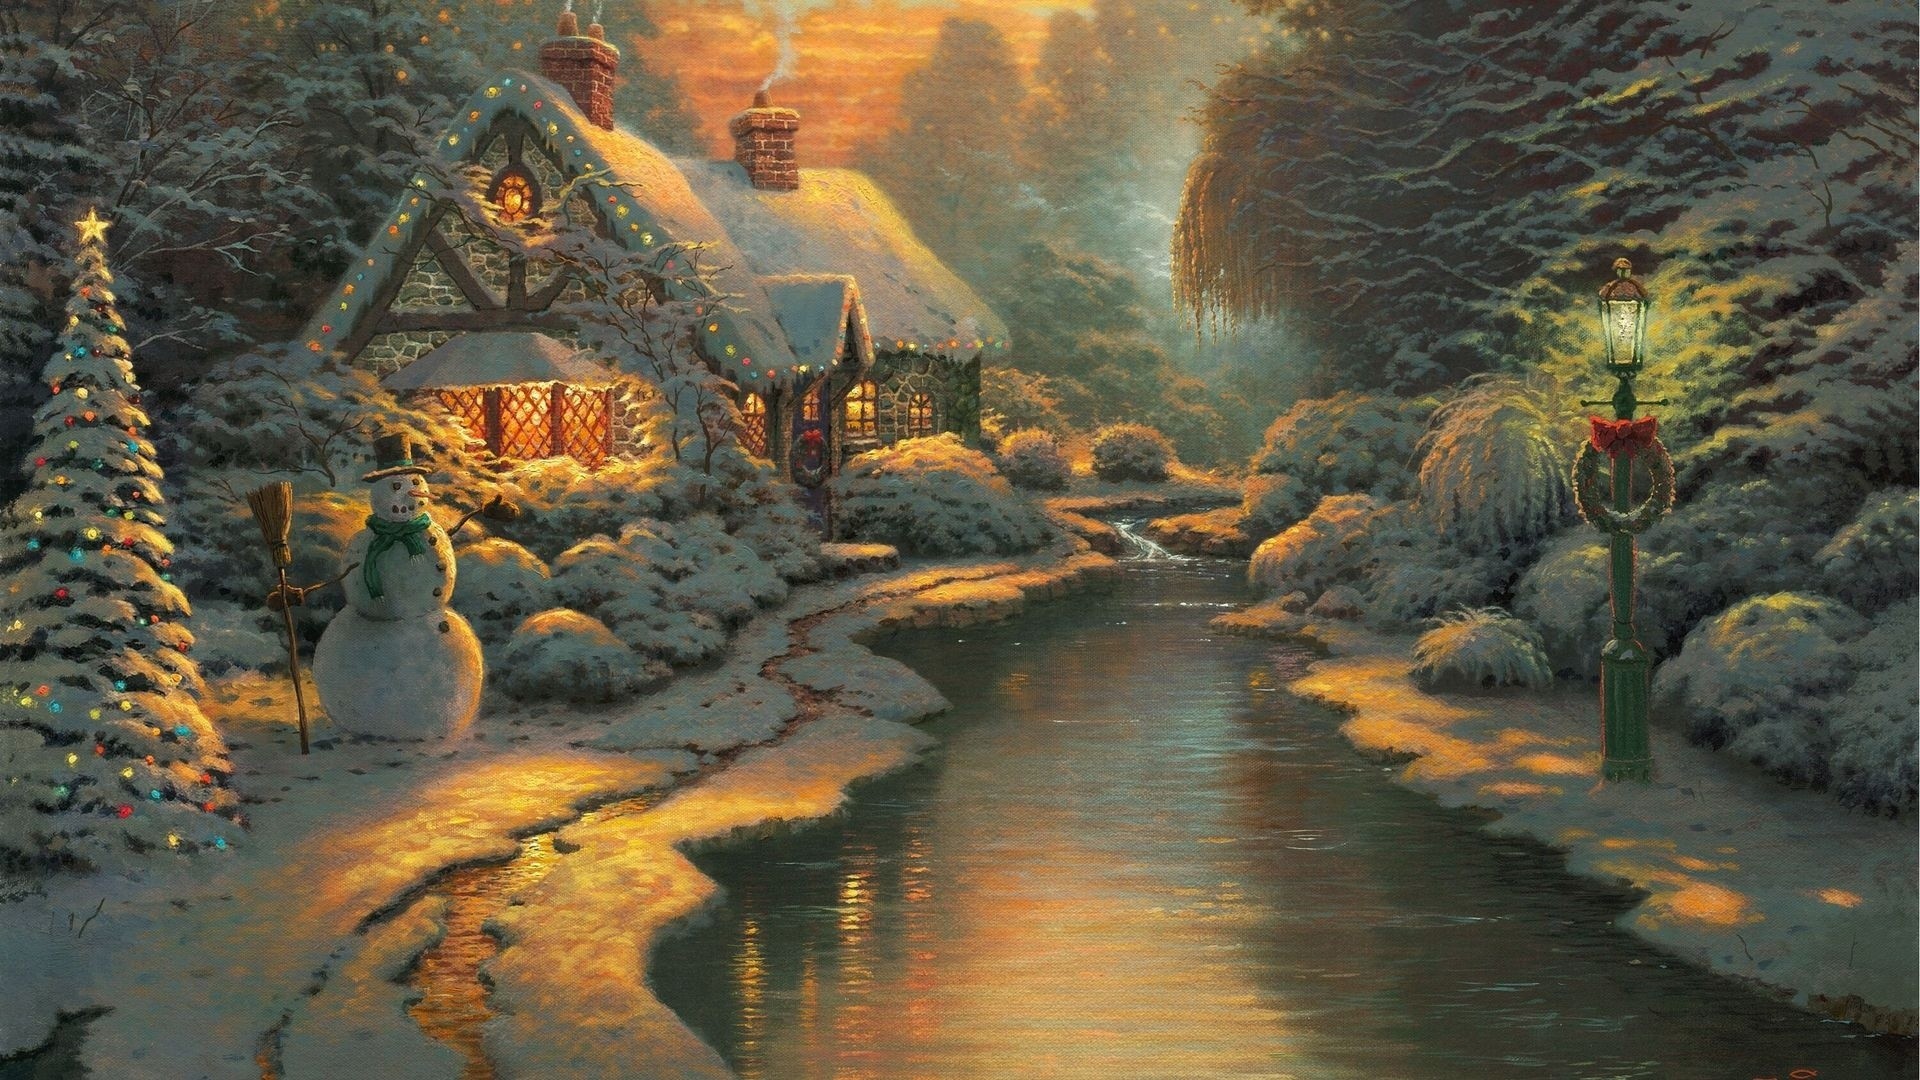 1920x1080 Thomas Kinkade Christmas Village. Thomas Kinkade Christmas